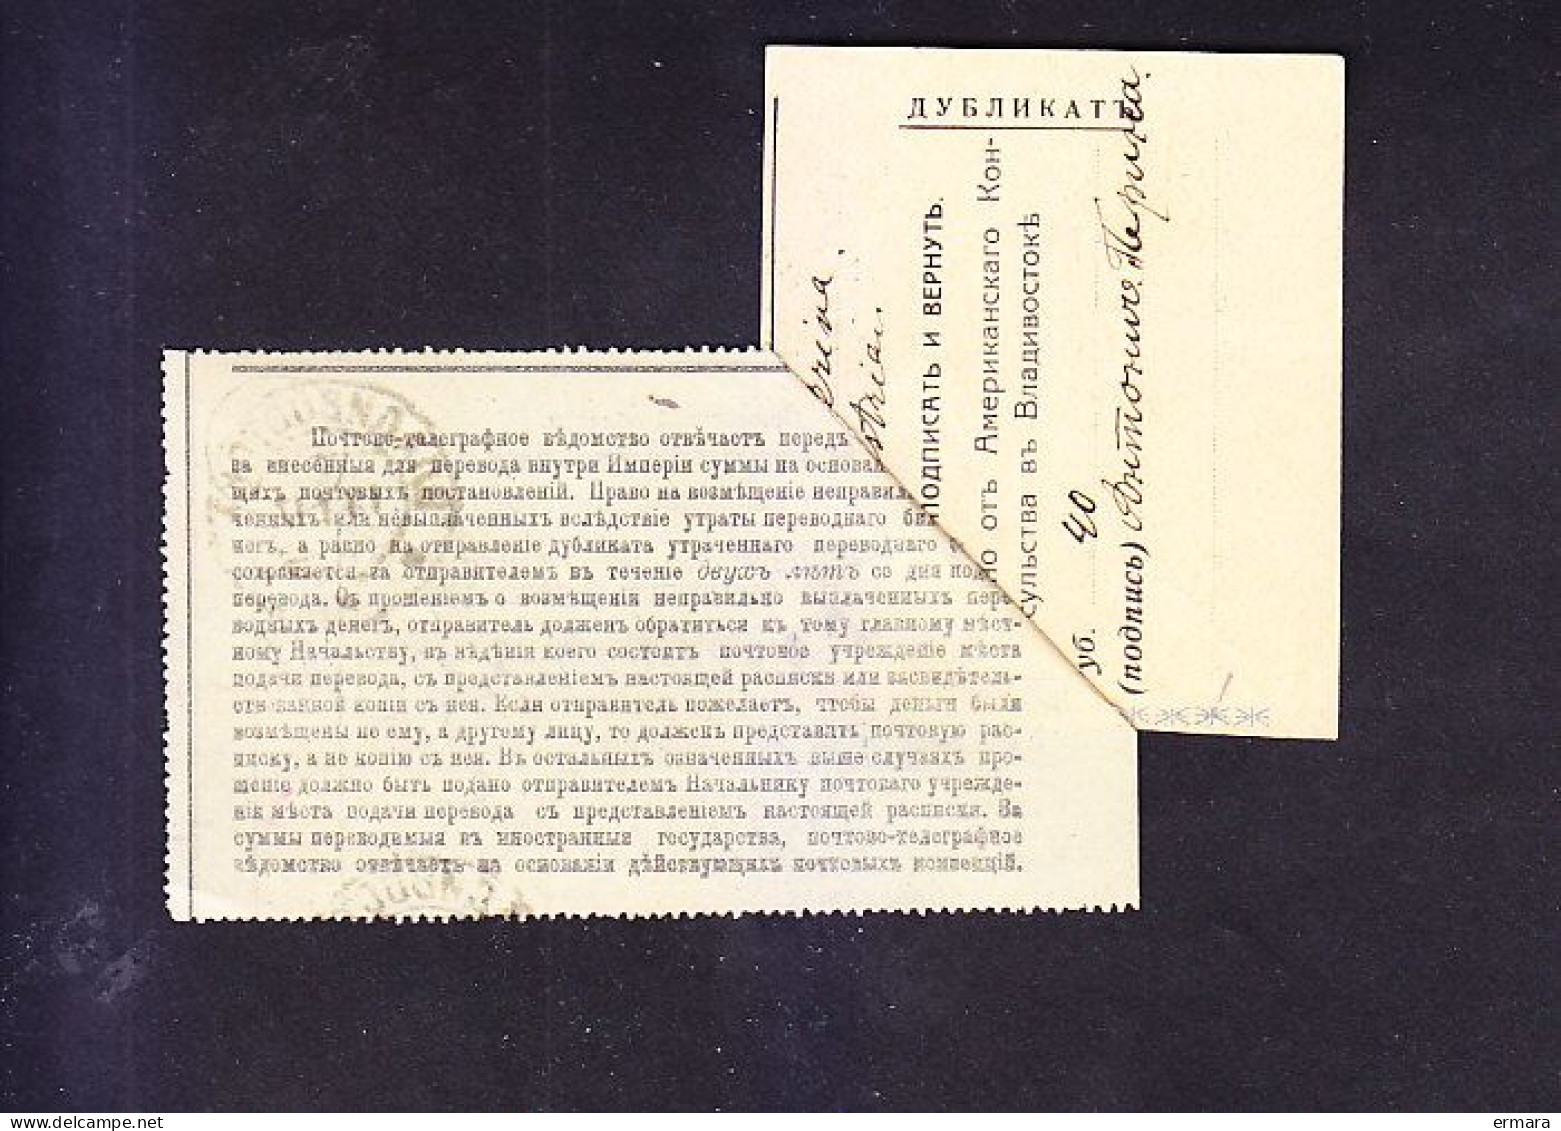 RECEIPT FOR ACCEPTING A MONEY TRANSFER FOR 40 RUBLES VLADIVOSTOK - NIKOLSK - USSURIYSKIY 01. 1917 - Sibirien Und Fernost